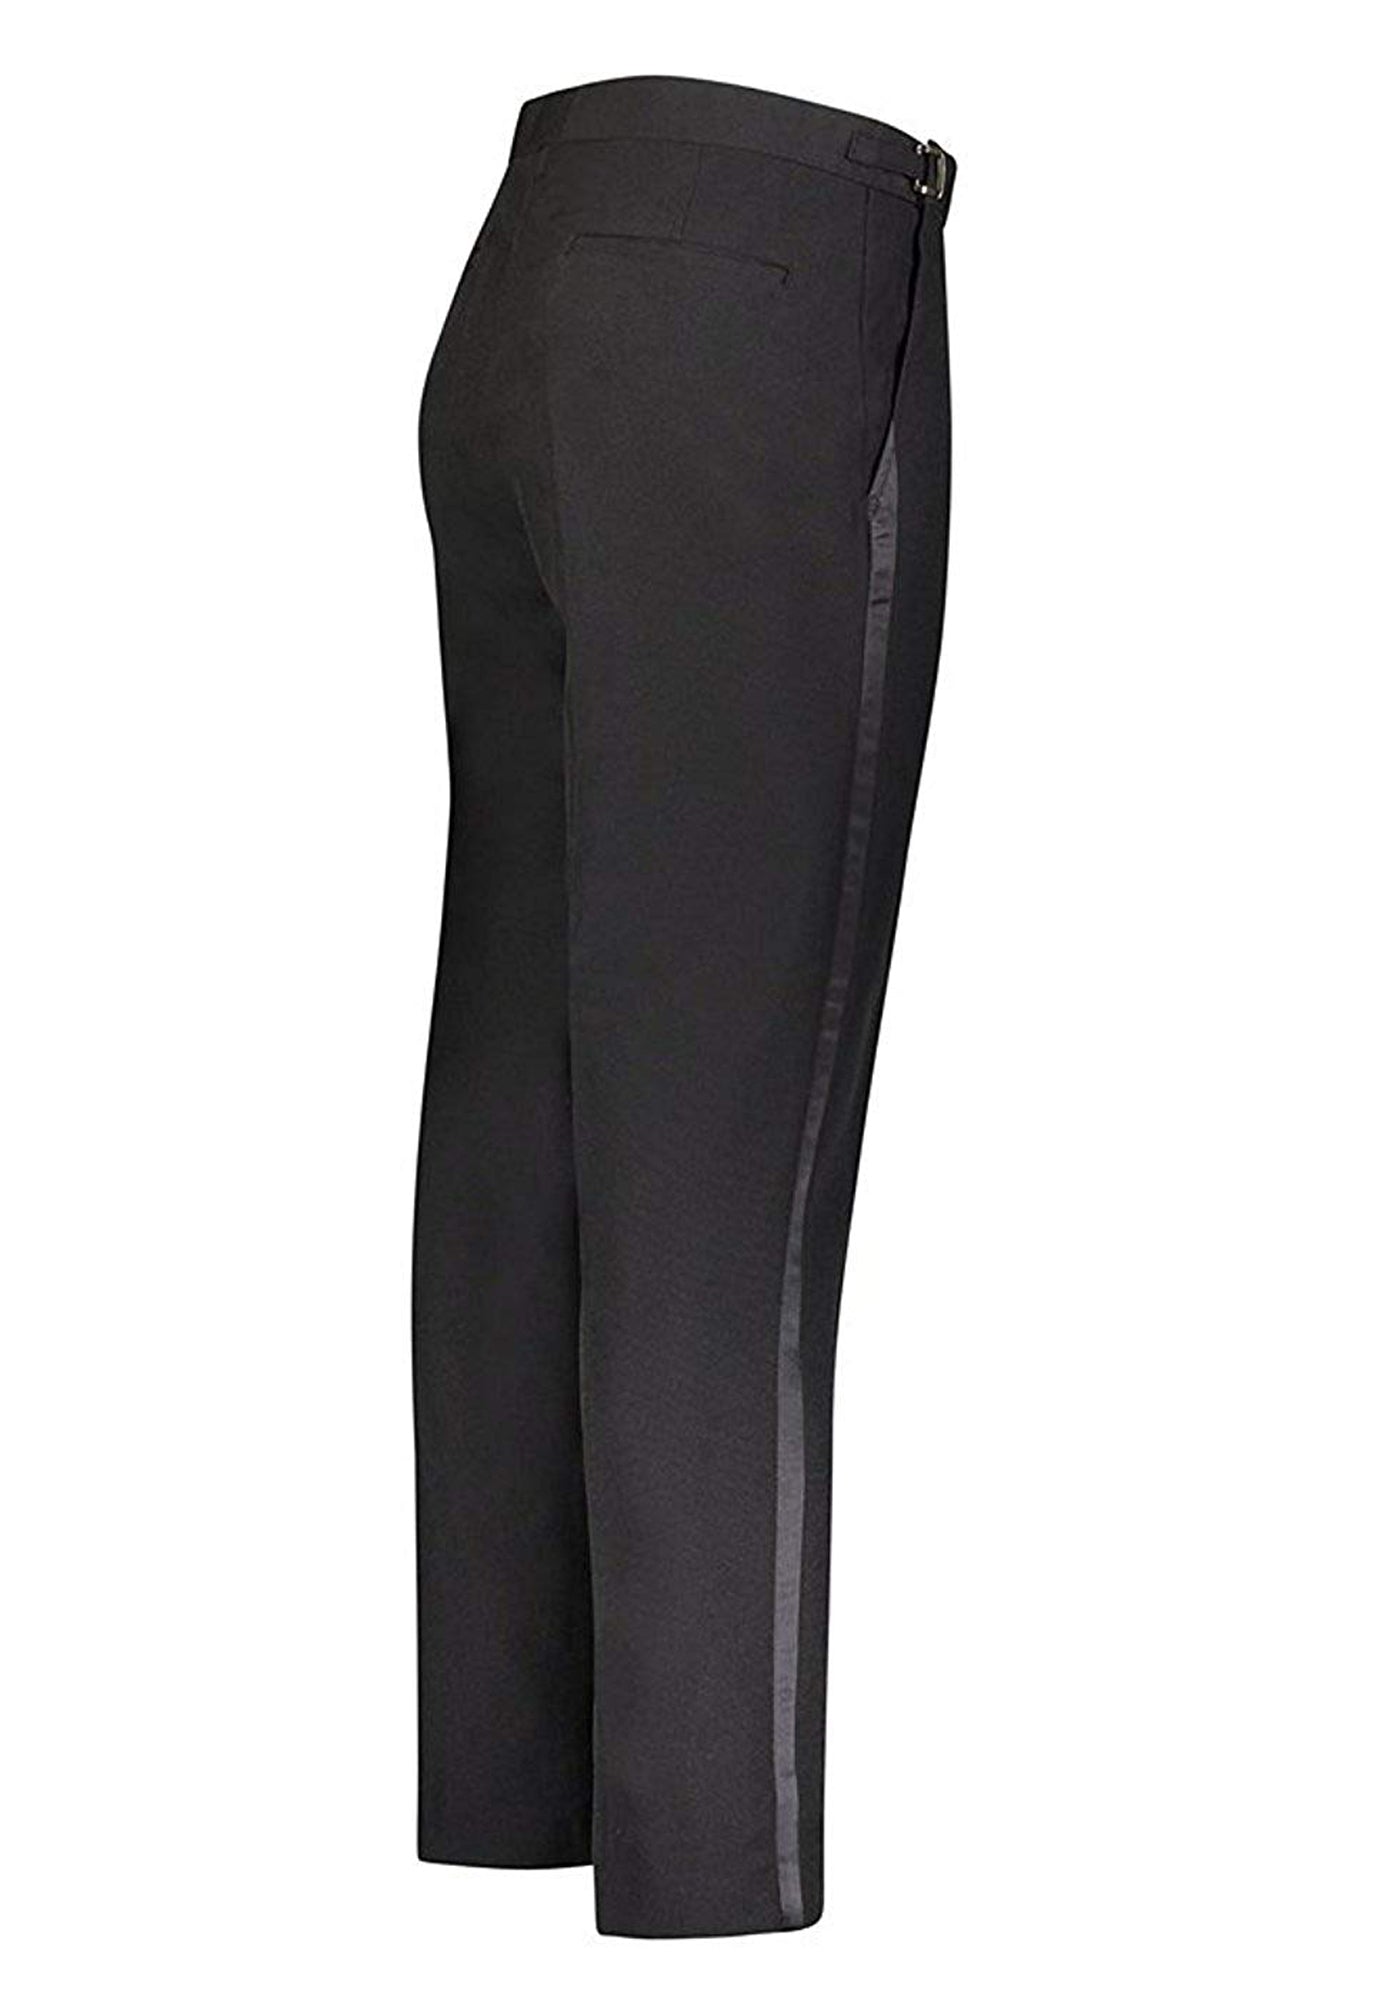 Men's Black, Adjustable-Waist, Pleated Front Tuxedo Pants with Satin S -  99tux